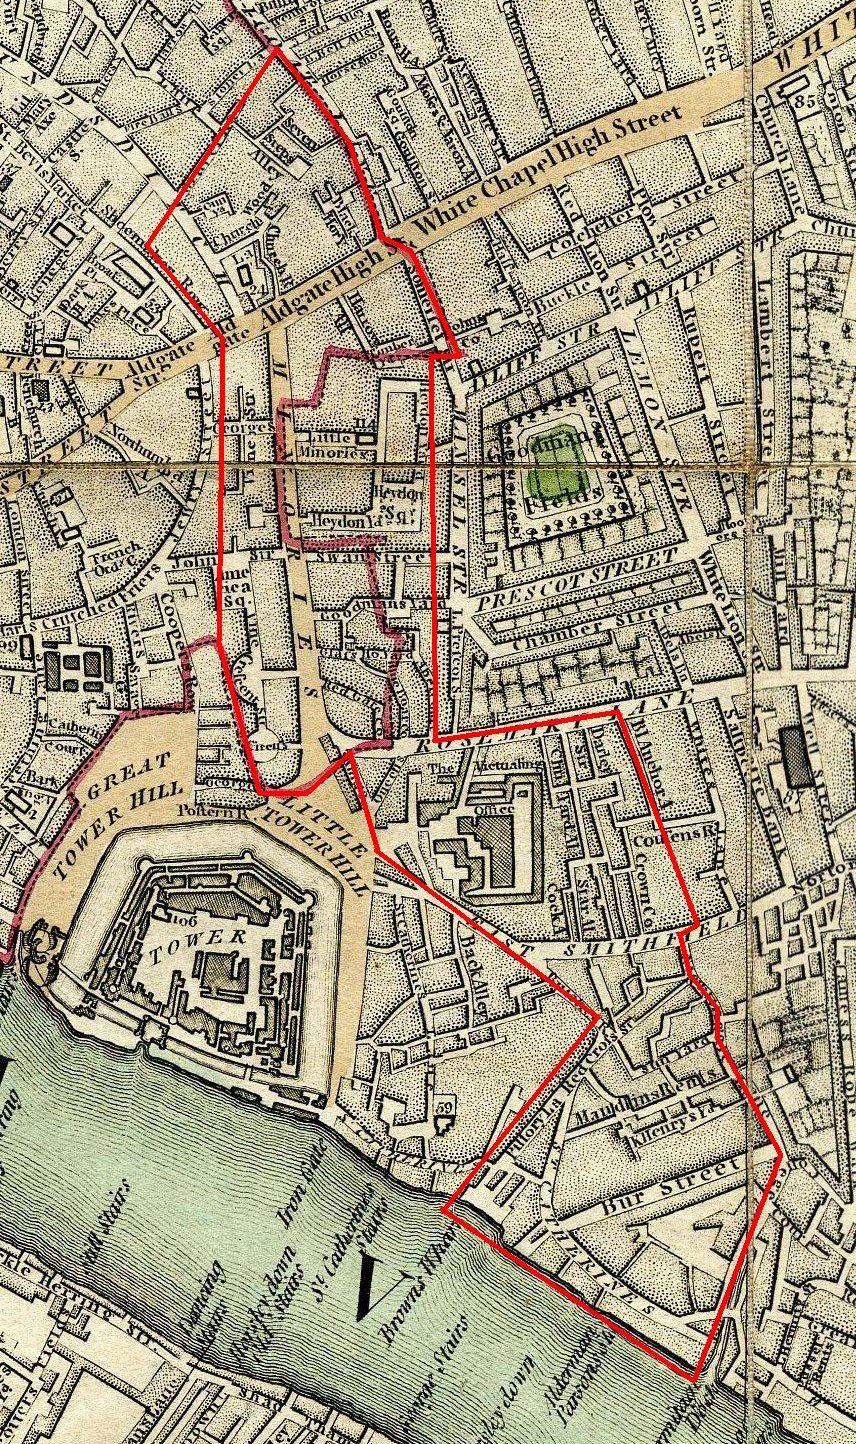 The parish boundaries of St Botolph Aldgate